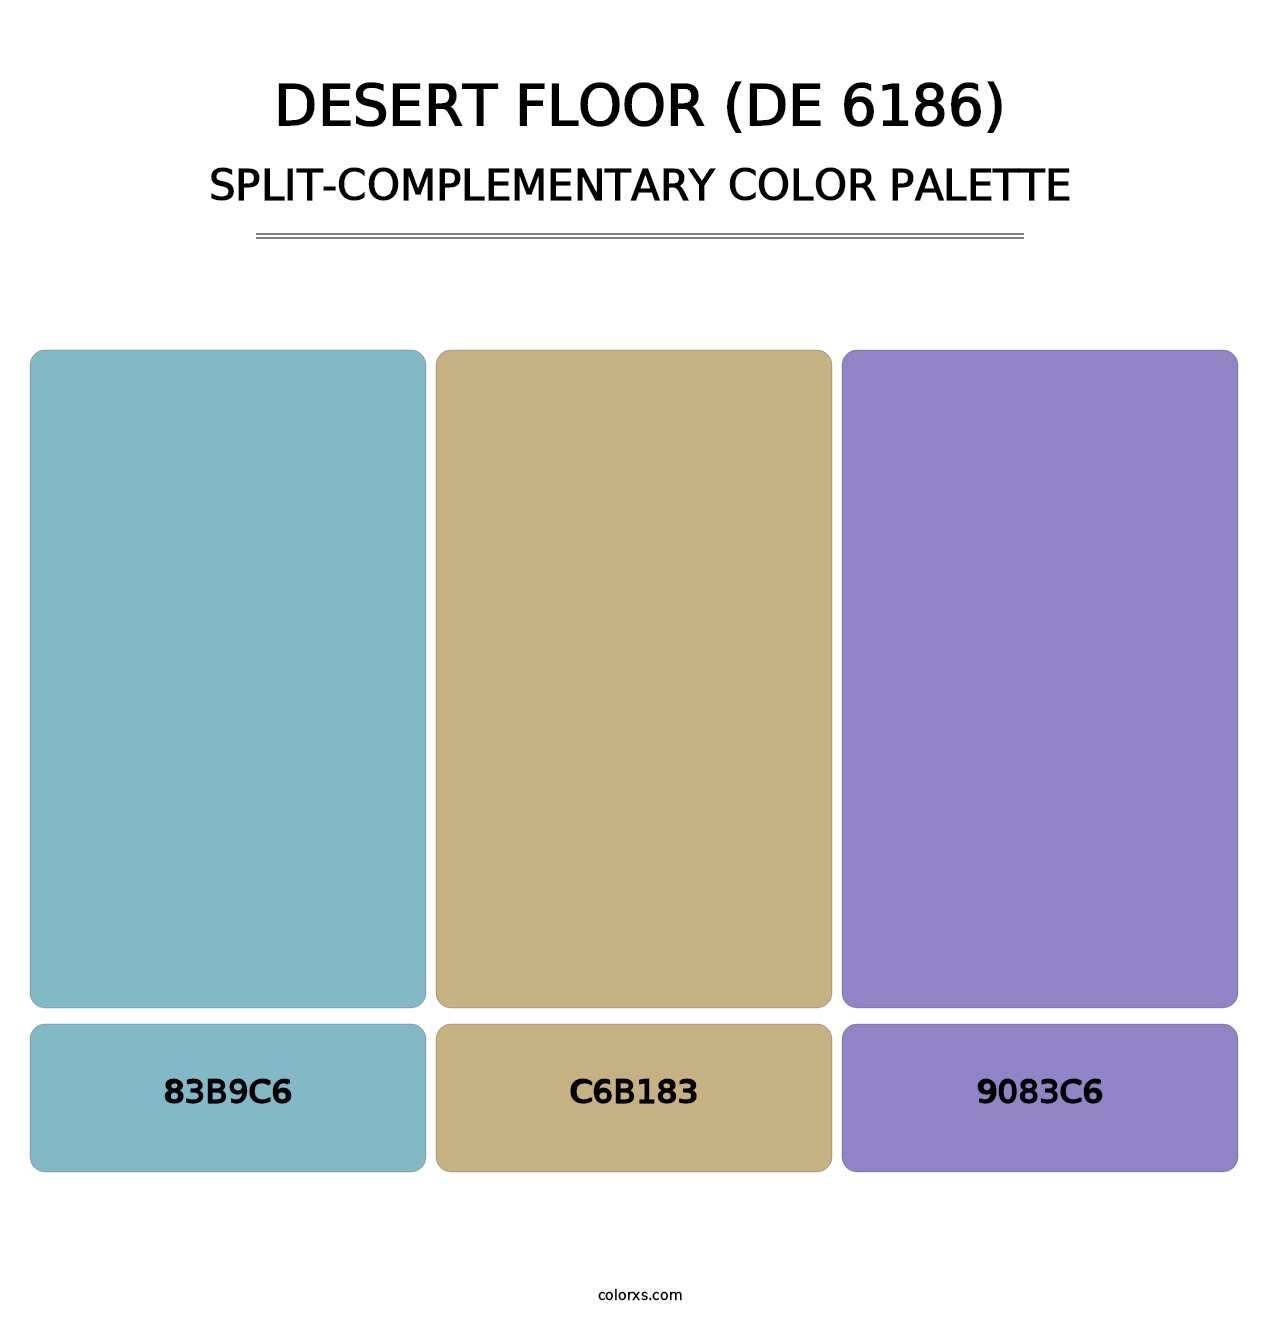 Desert Floor (DE 6186) - Split-Complementary Color Palette